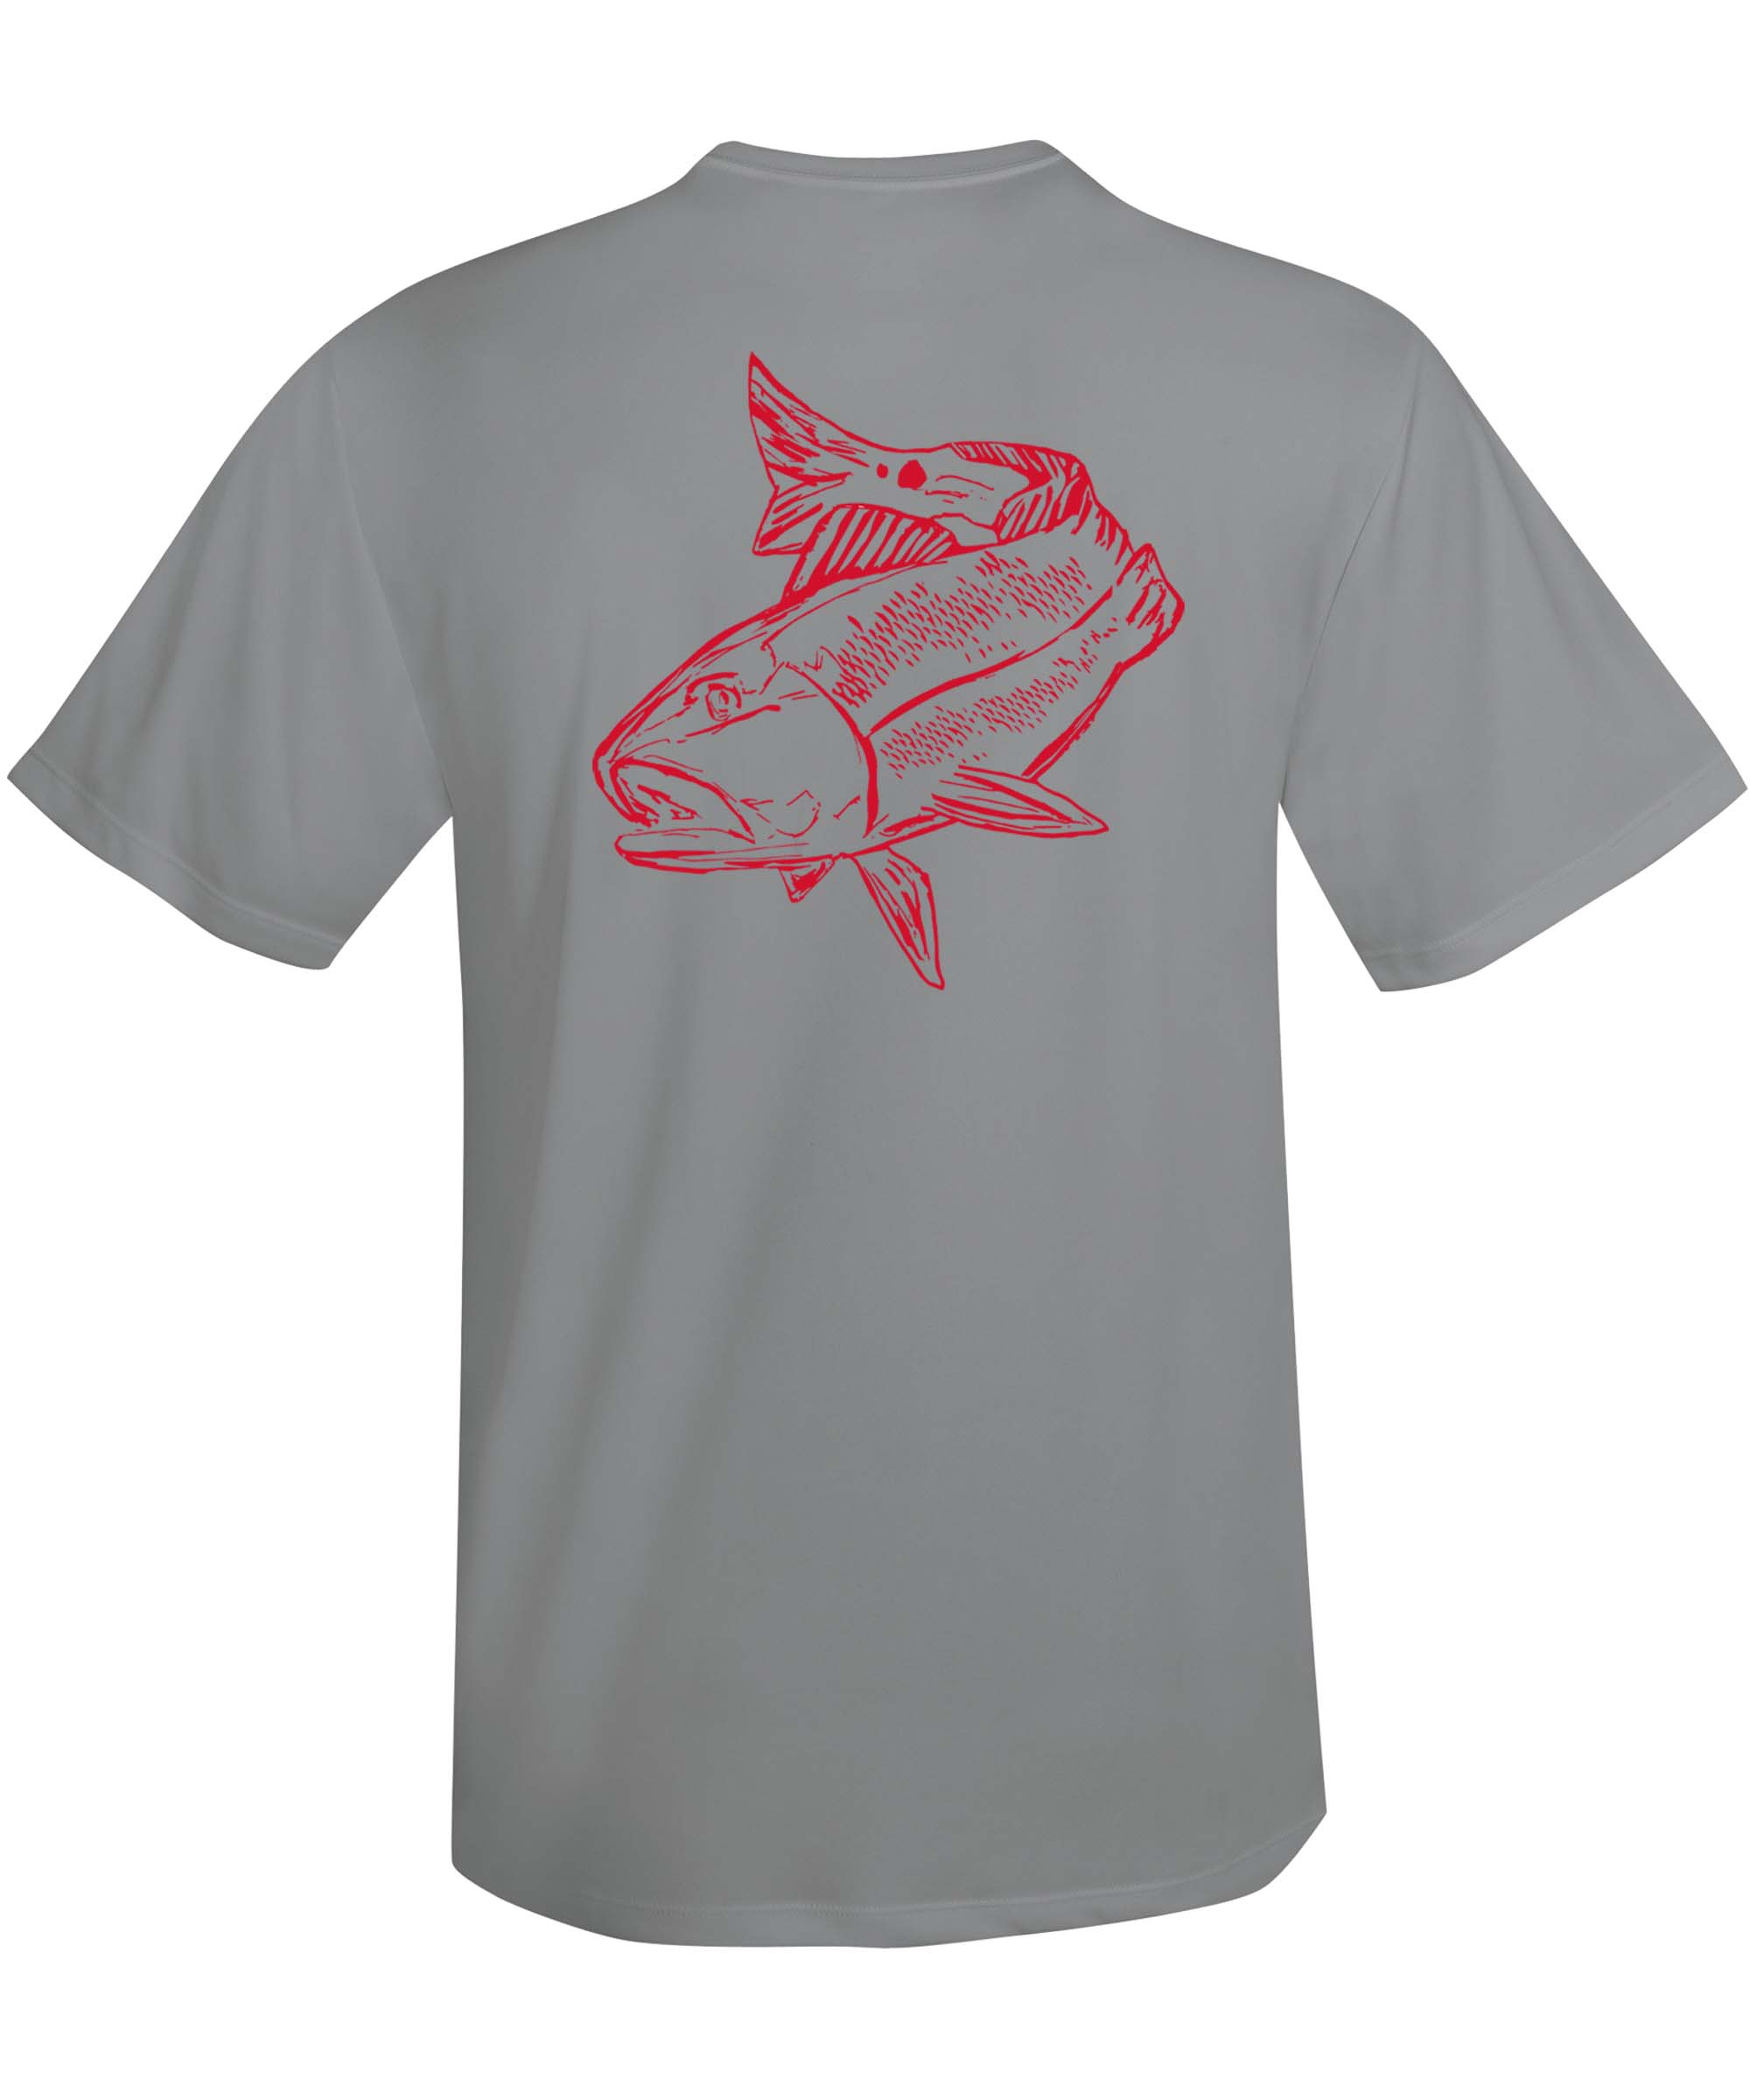 New Redfish Design! Performance Shirts, Hoodies, Digital Camo, 50+UPF ...